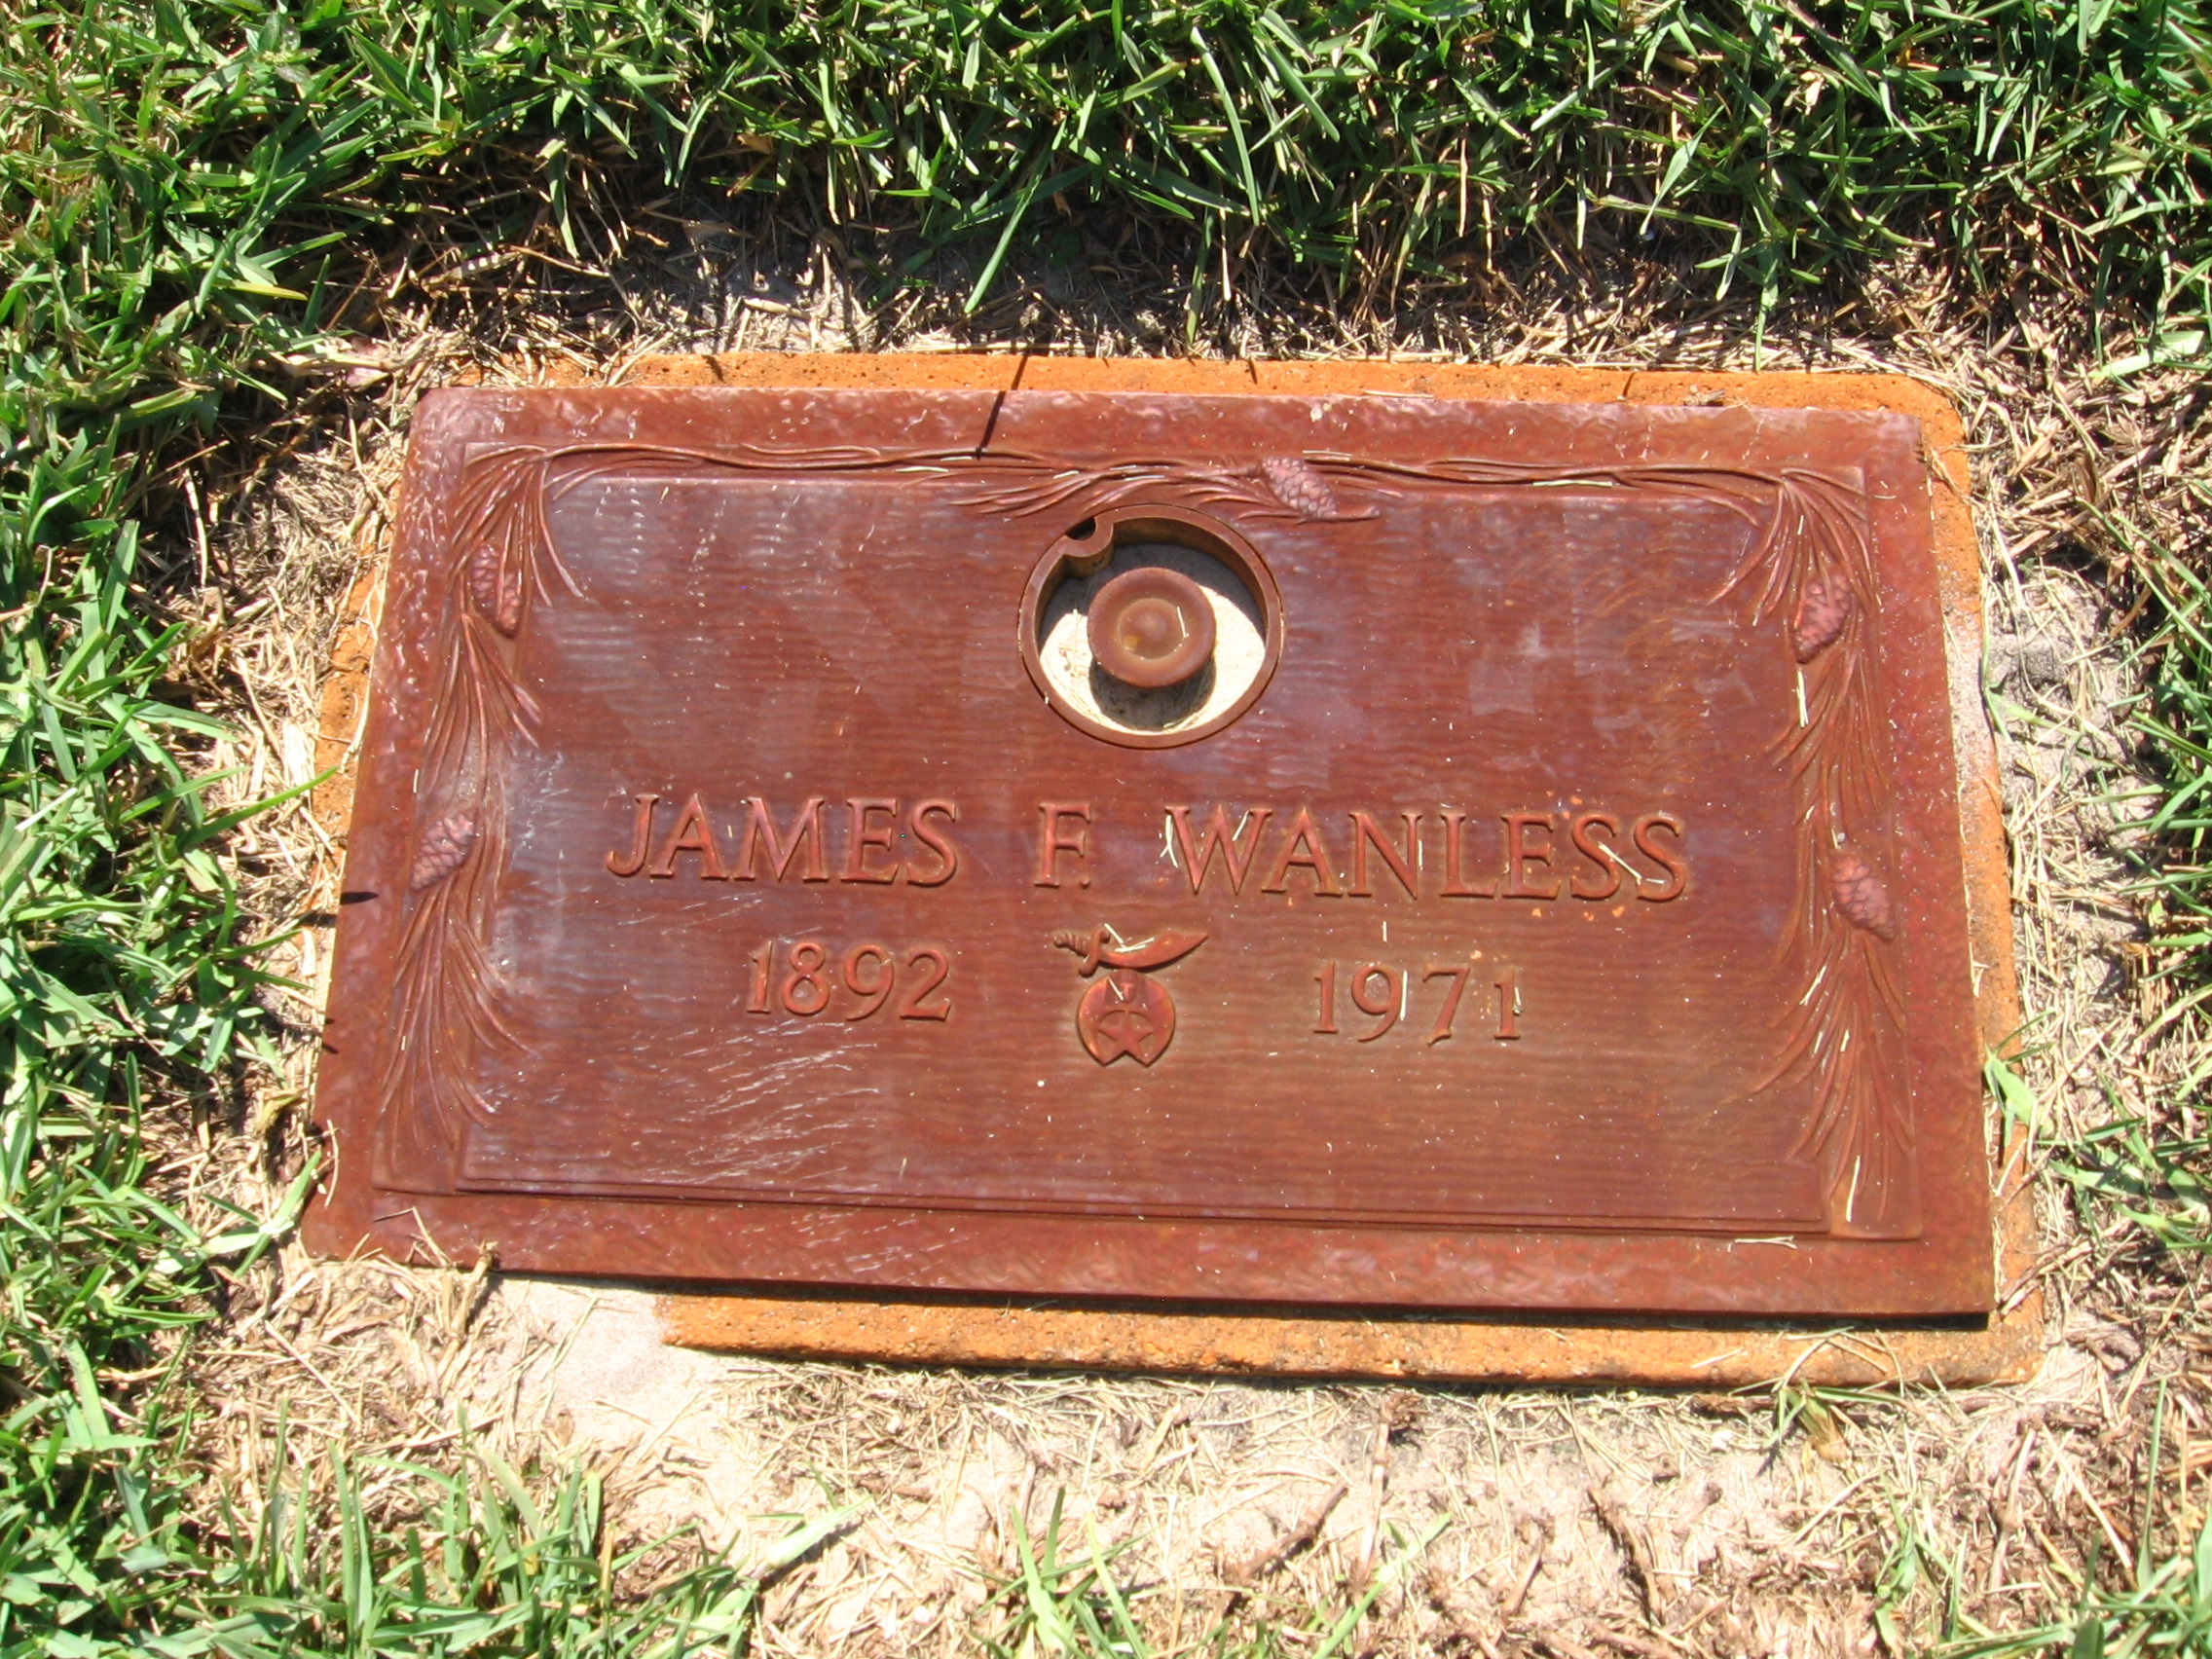 James E Wanless